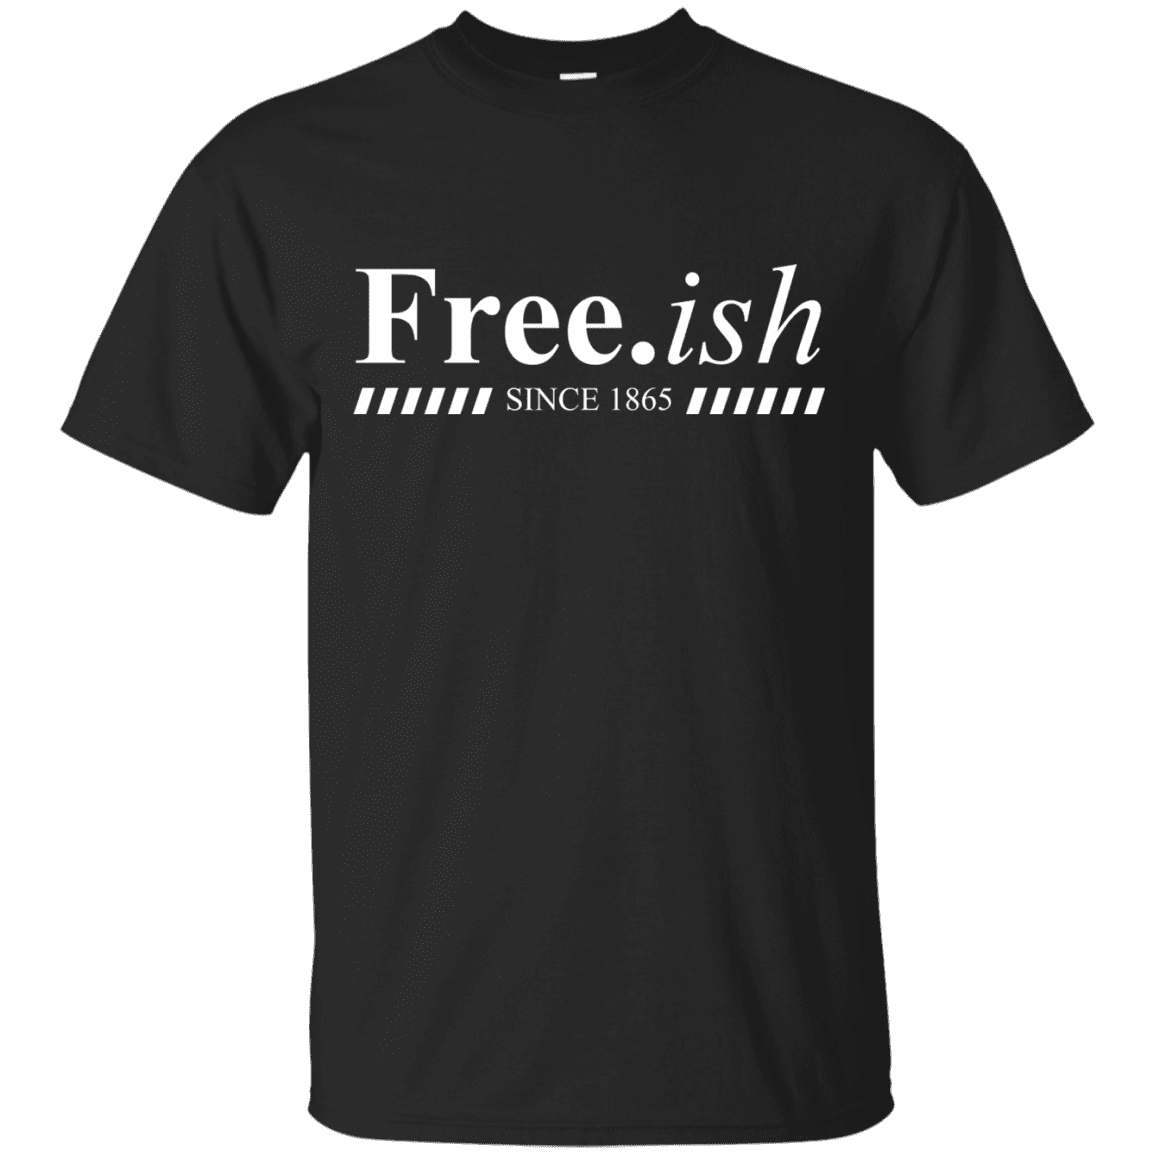 Free.ish t-shirt